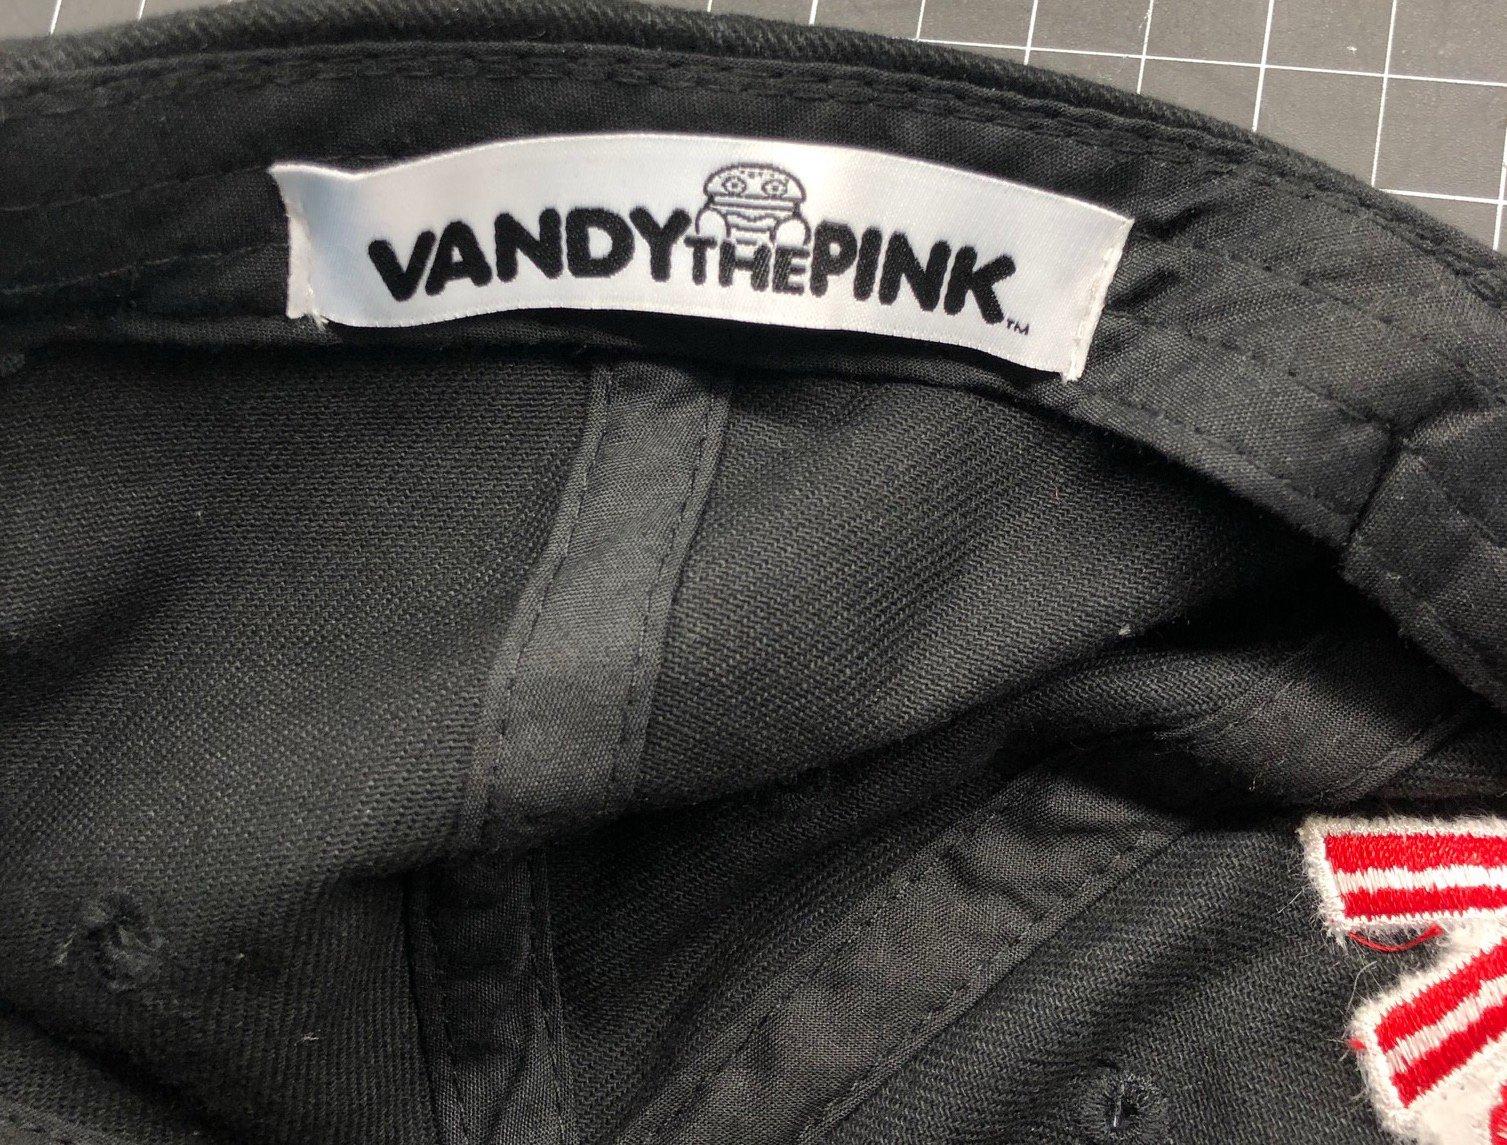 VANDY THE PINK - Vandy The Pink Corporation Trademark Registration